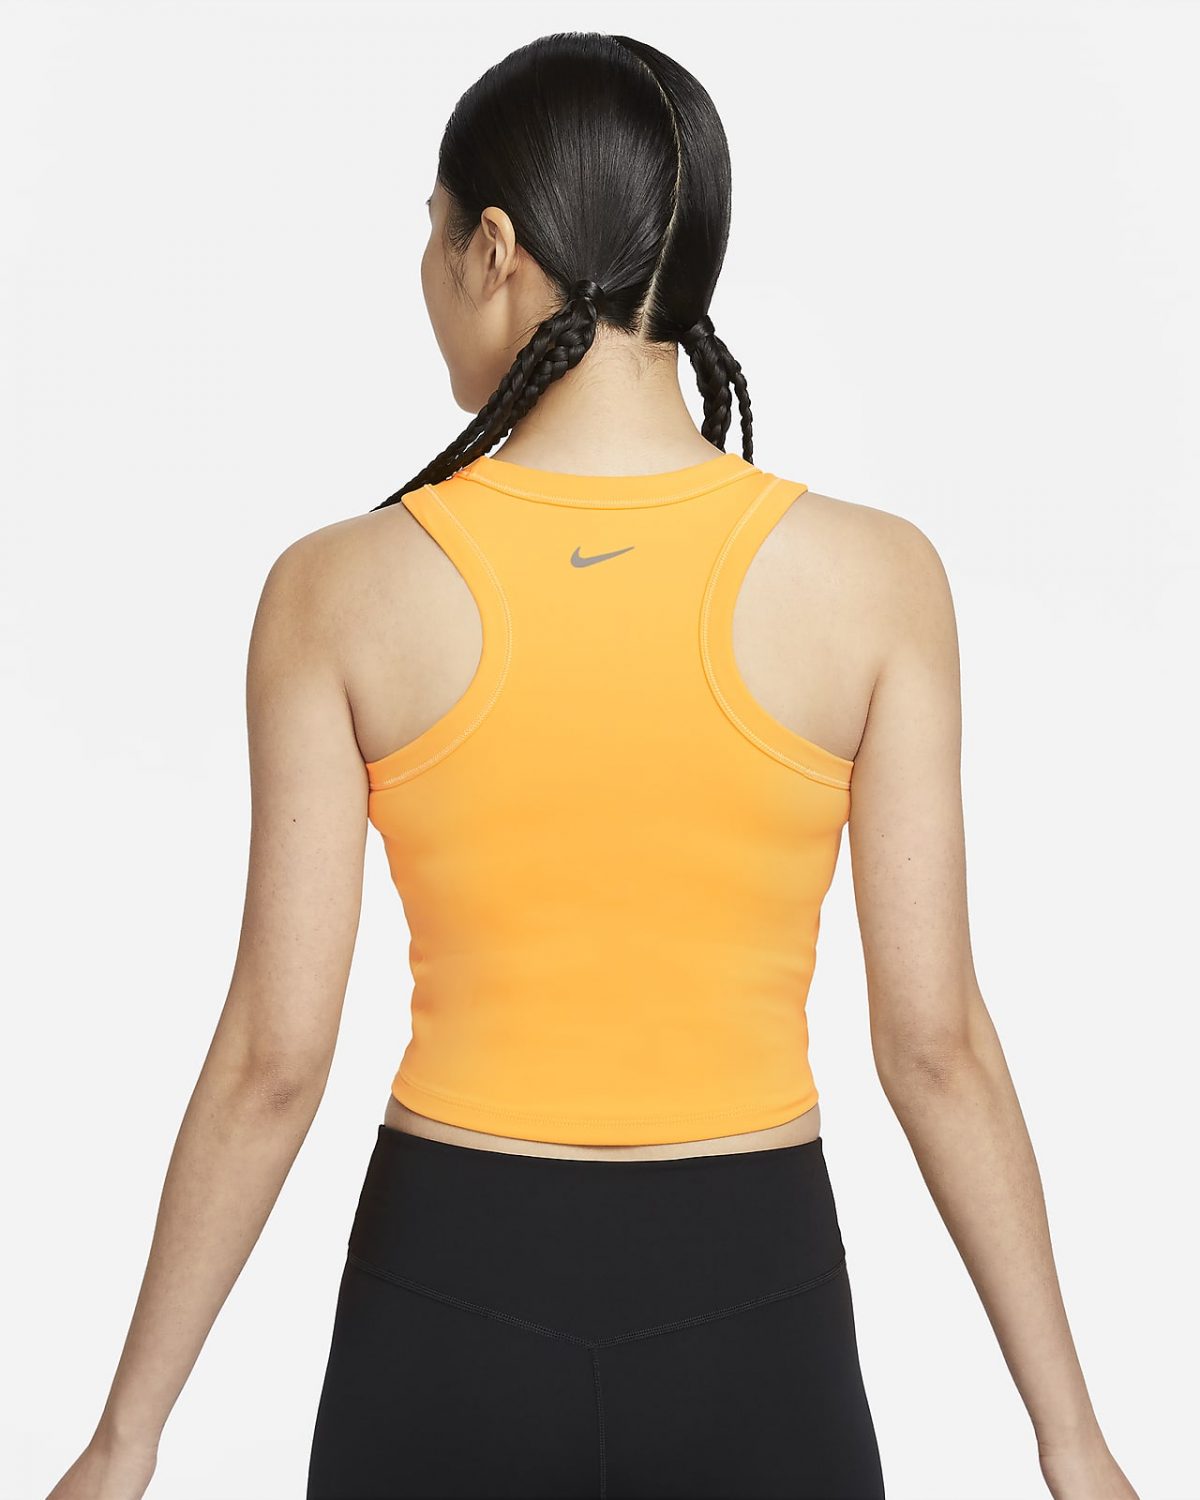 Женская спортивная одежда Nike One Fitted фотография